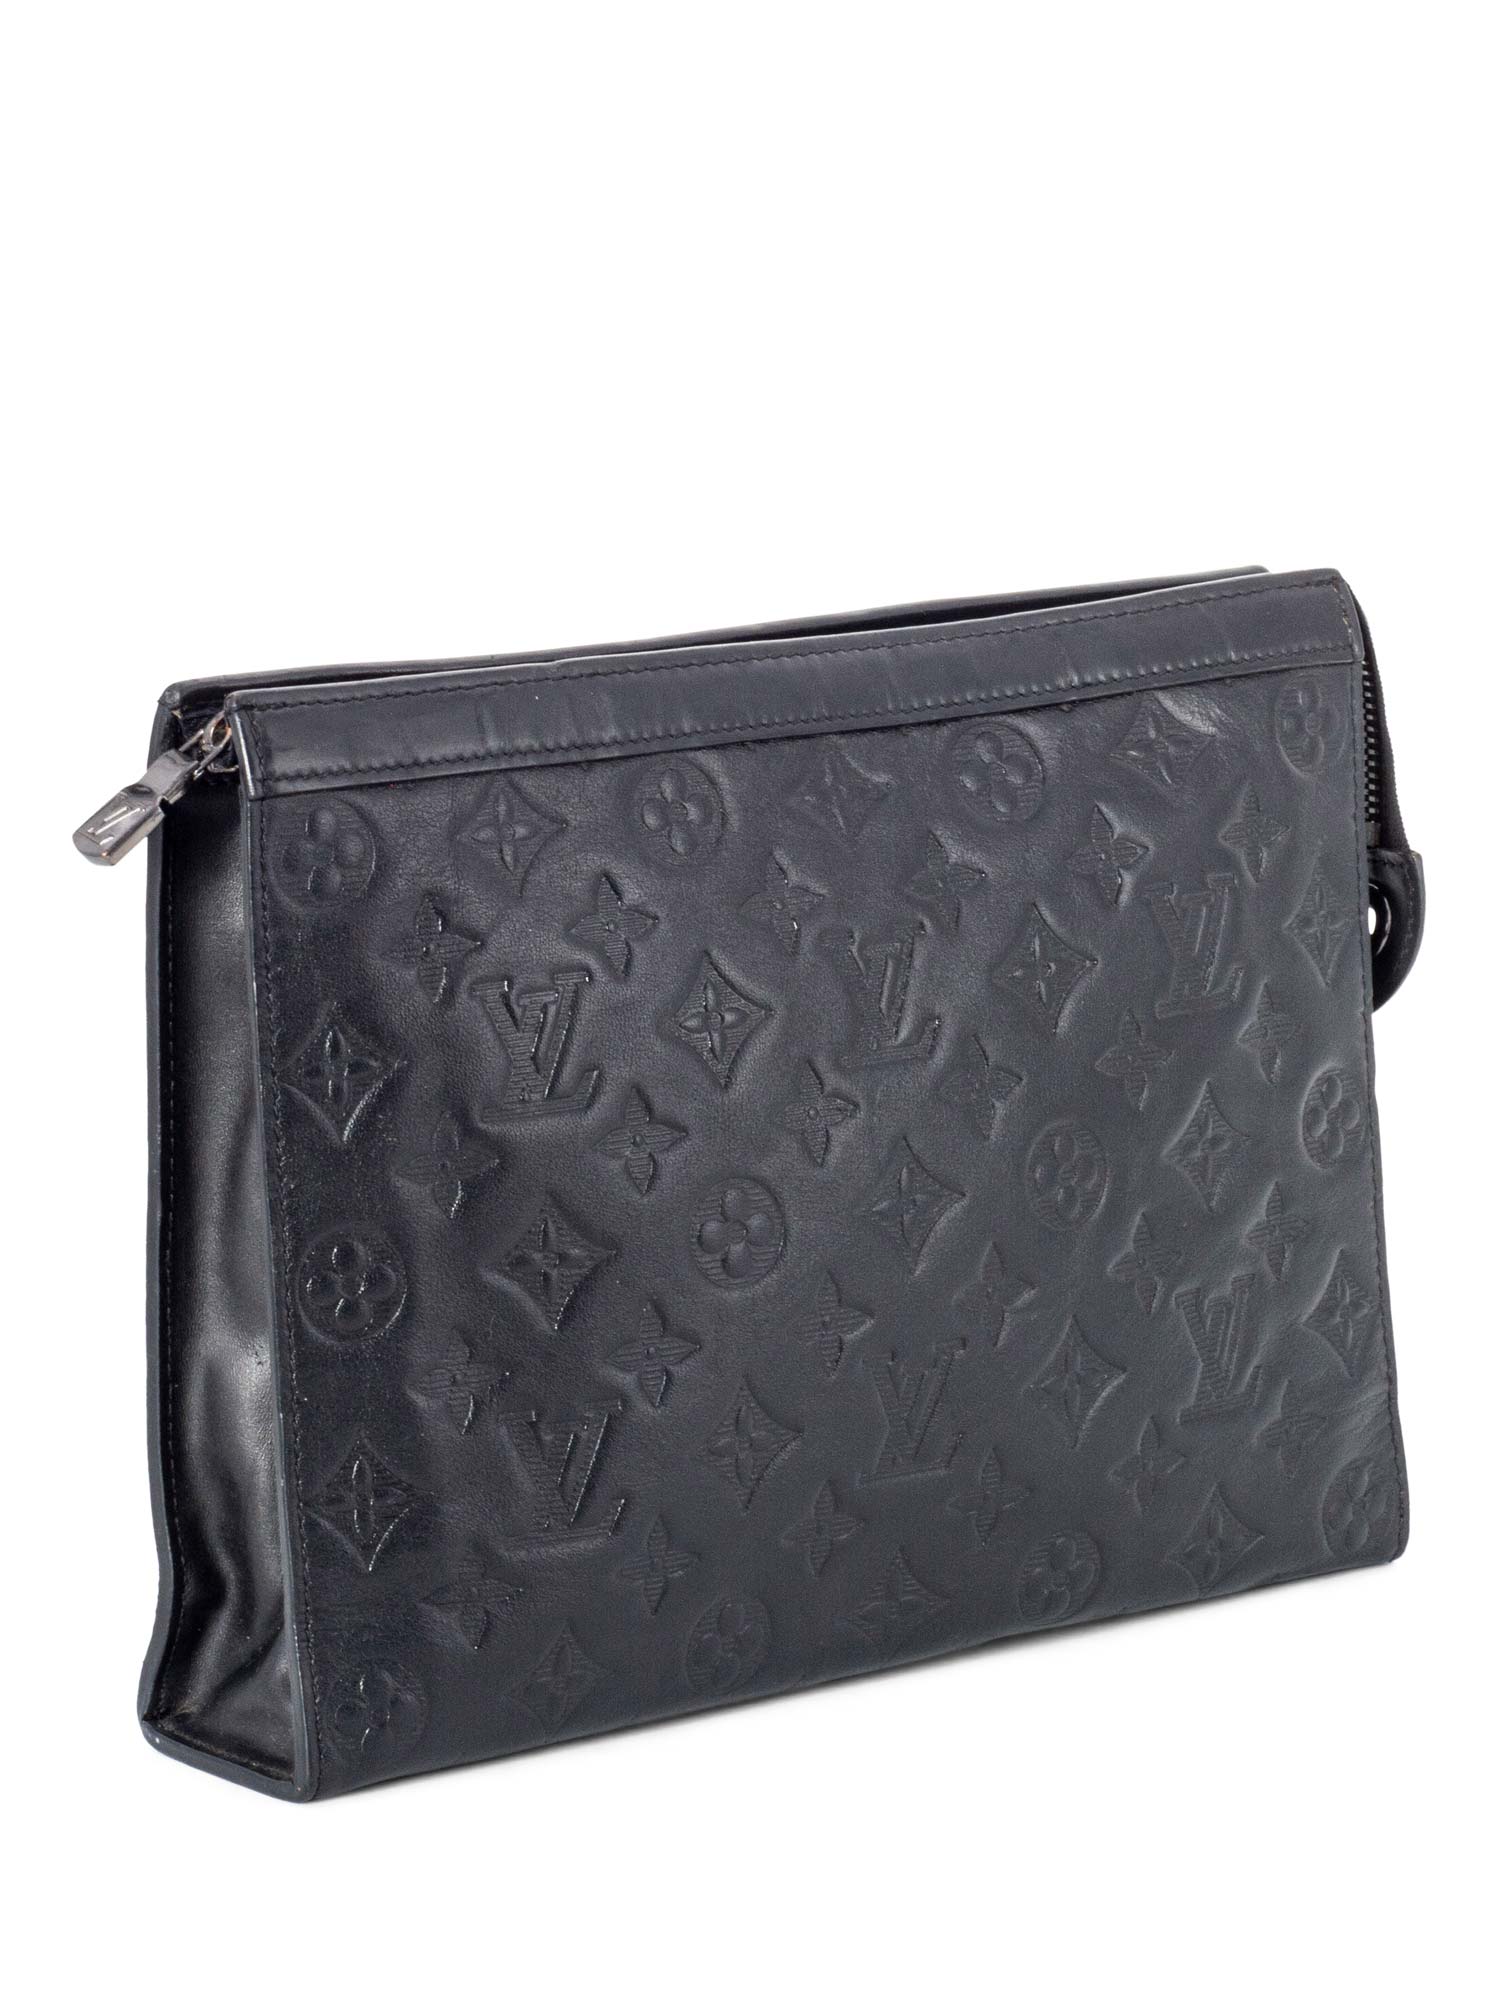 Louis Vuitton Leather Monogram Embossed Clutch Black-designer resale